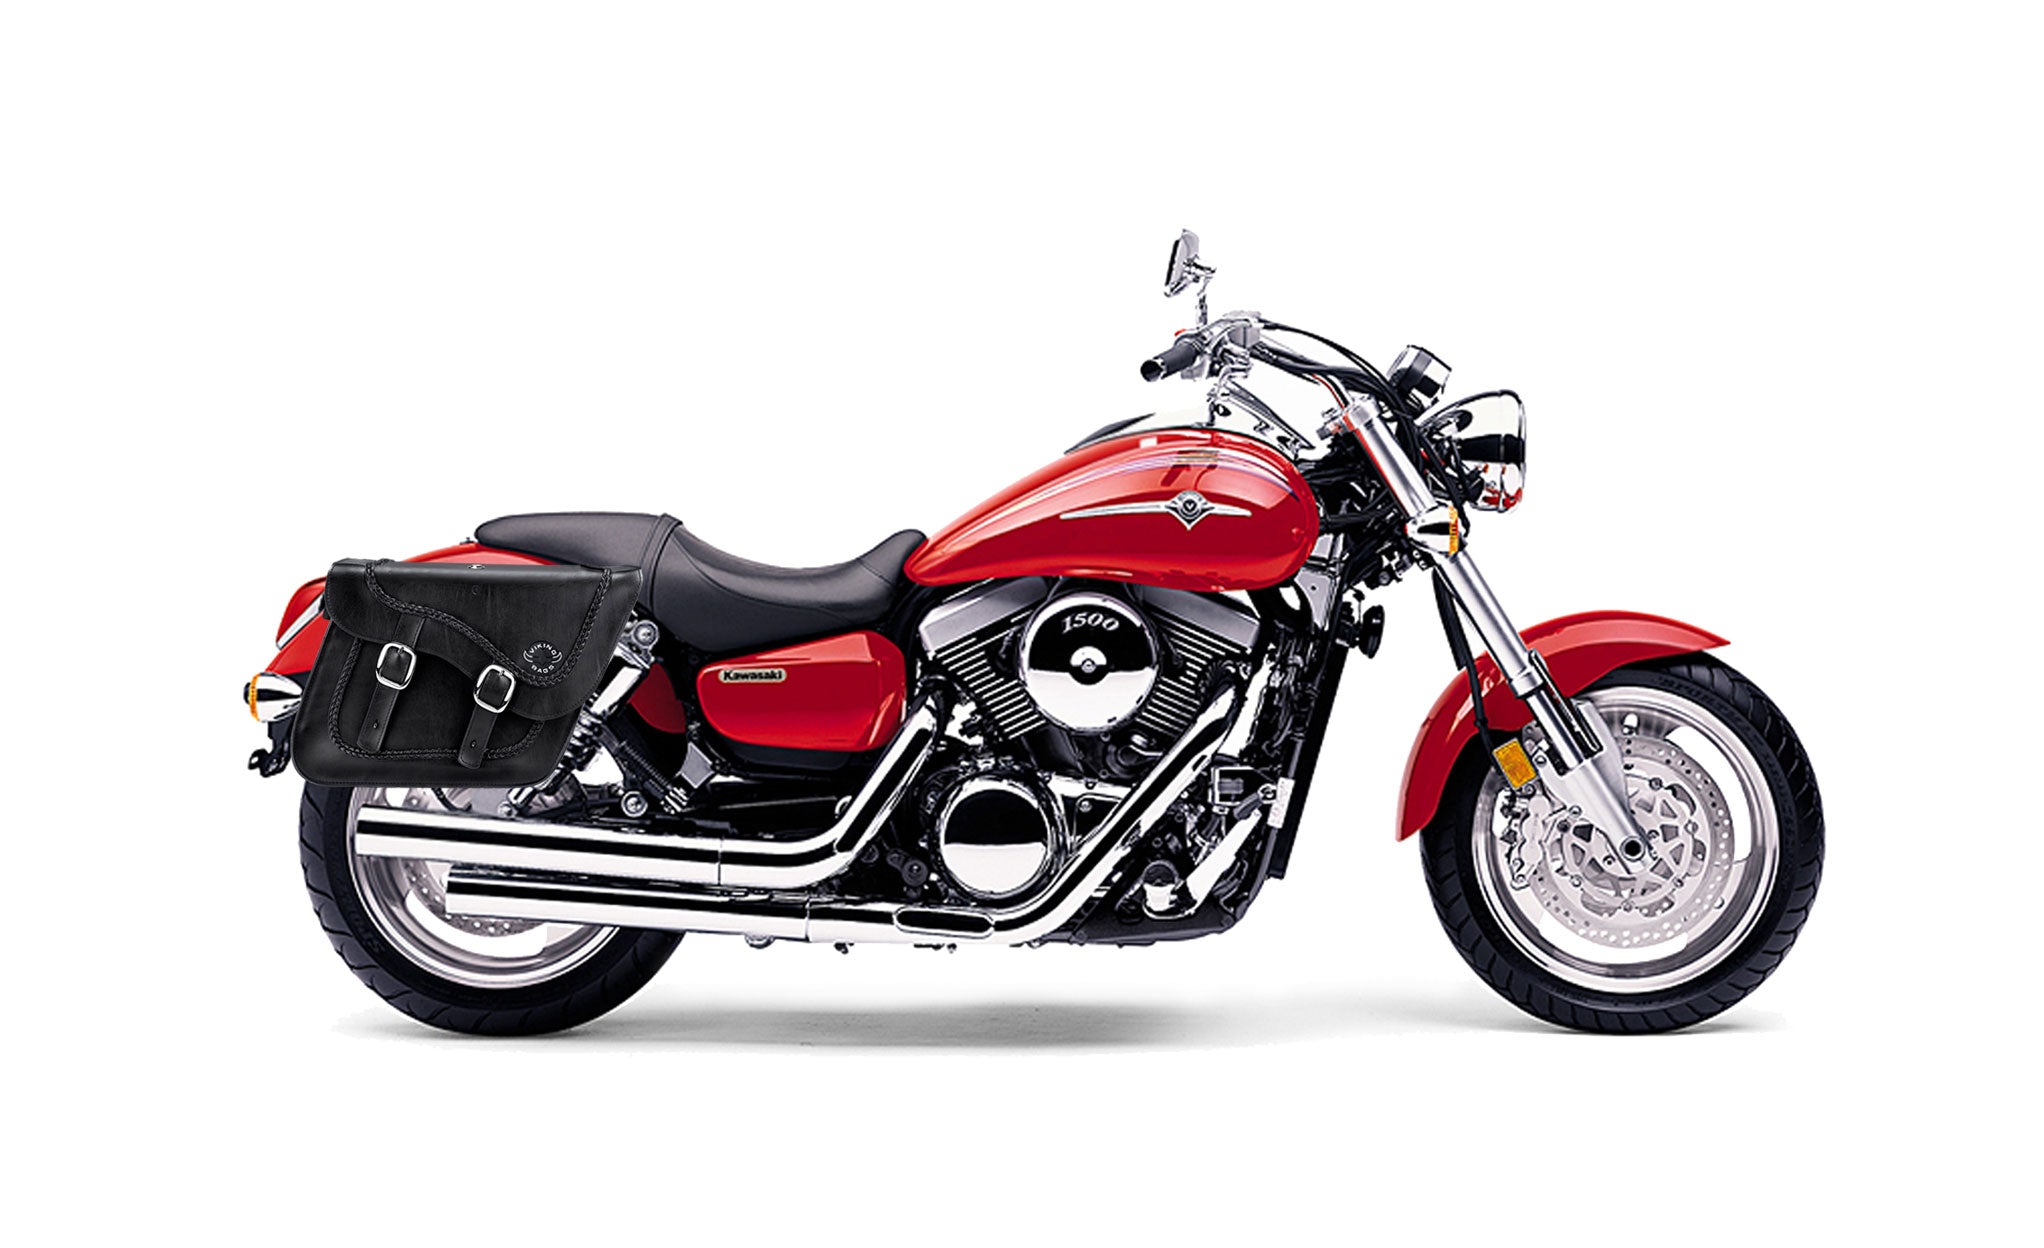 Viking Americano Kawasaki Mean Streak 1500 Braided Large Leather Motorcycle Saddlebags on Bike Photo @expand